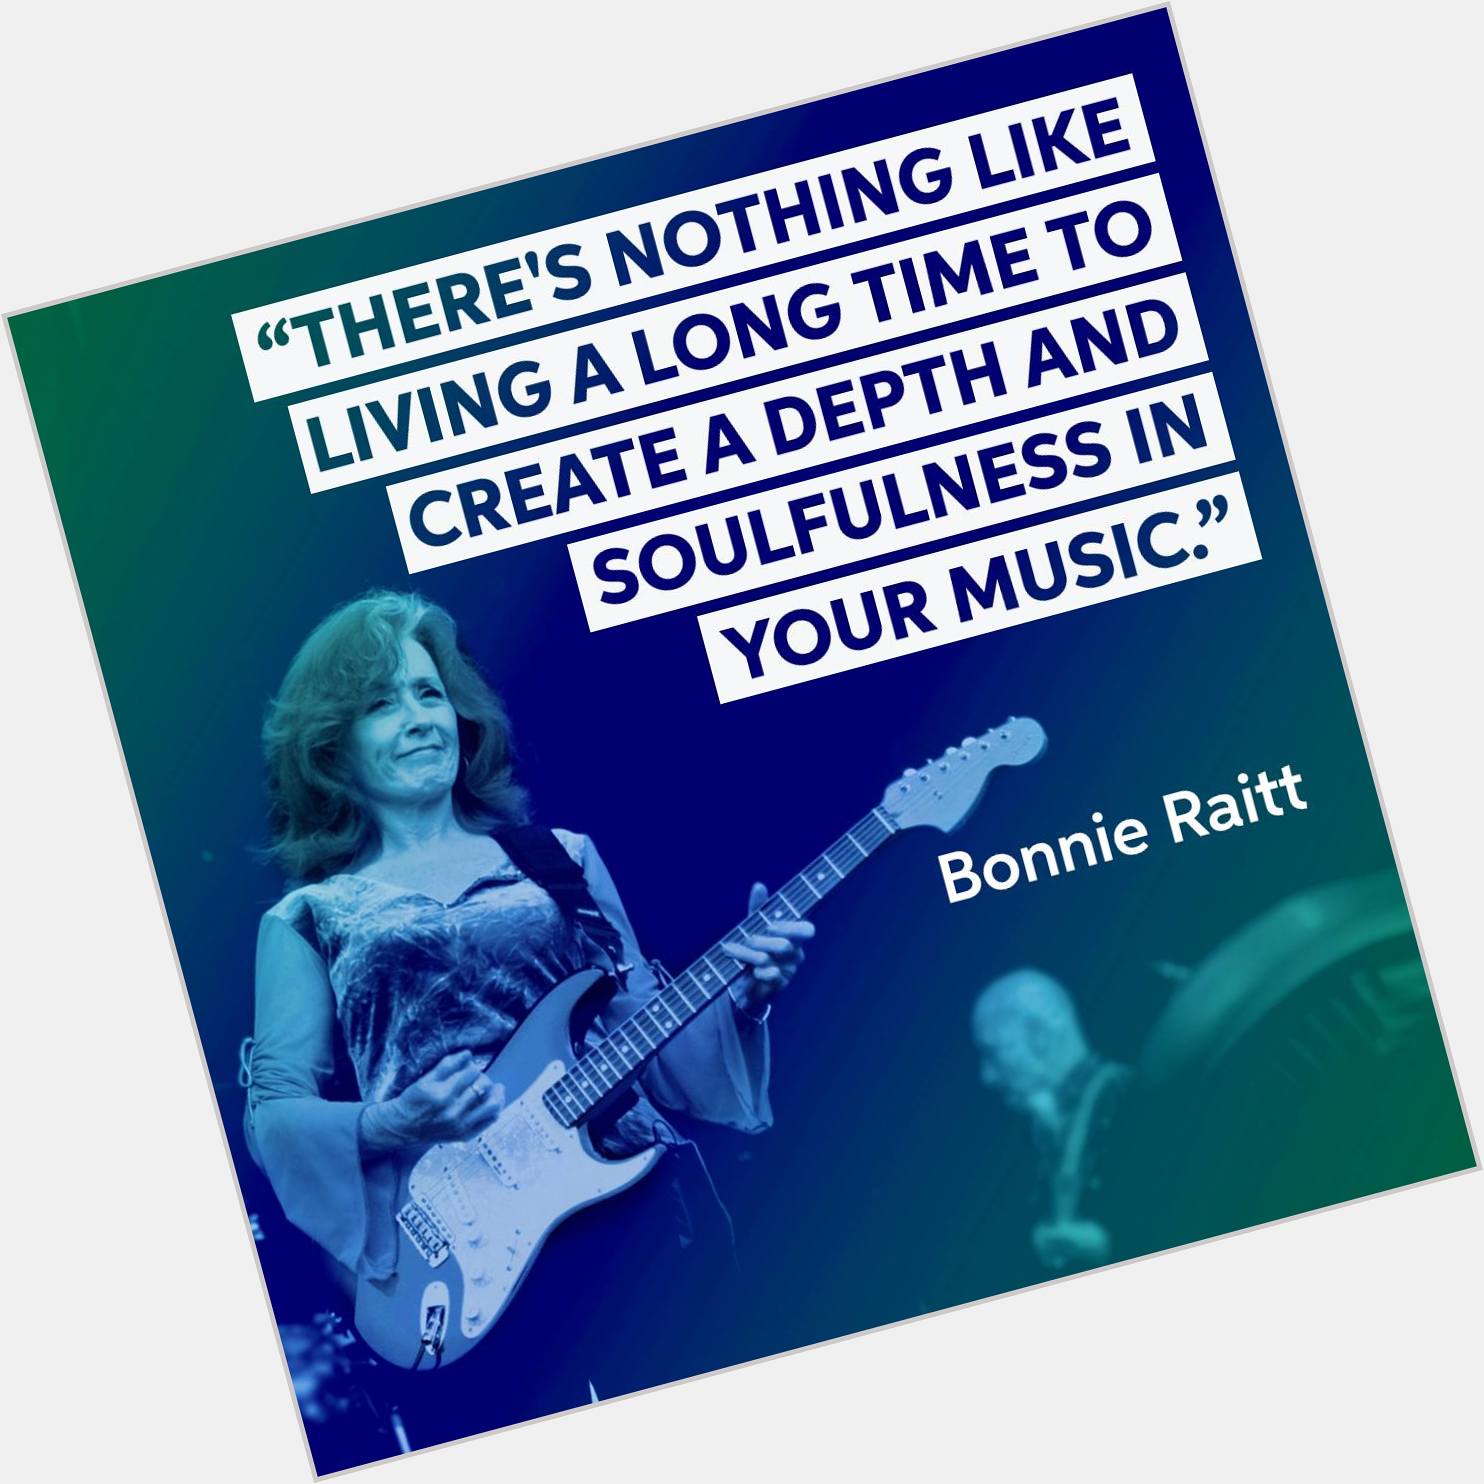  Happy Birthday to the great Bonnie Raitt! 